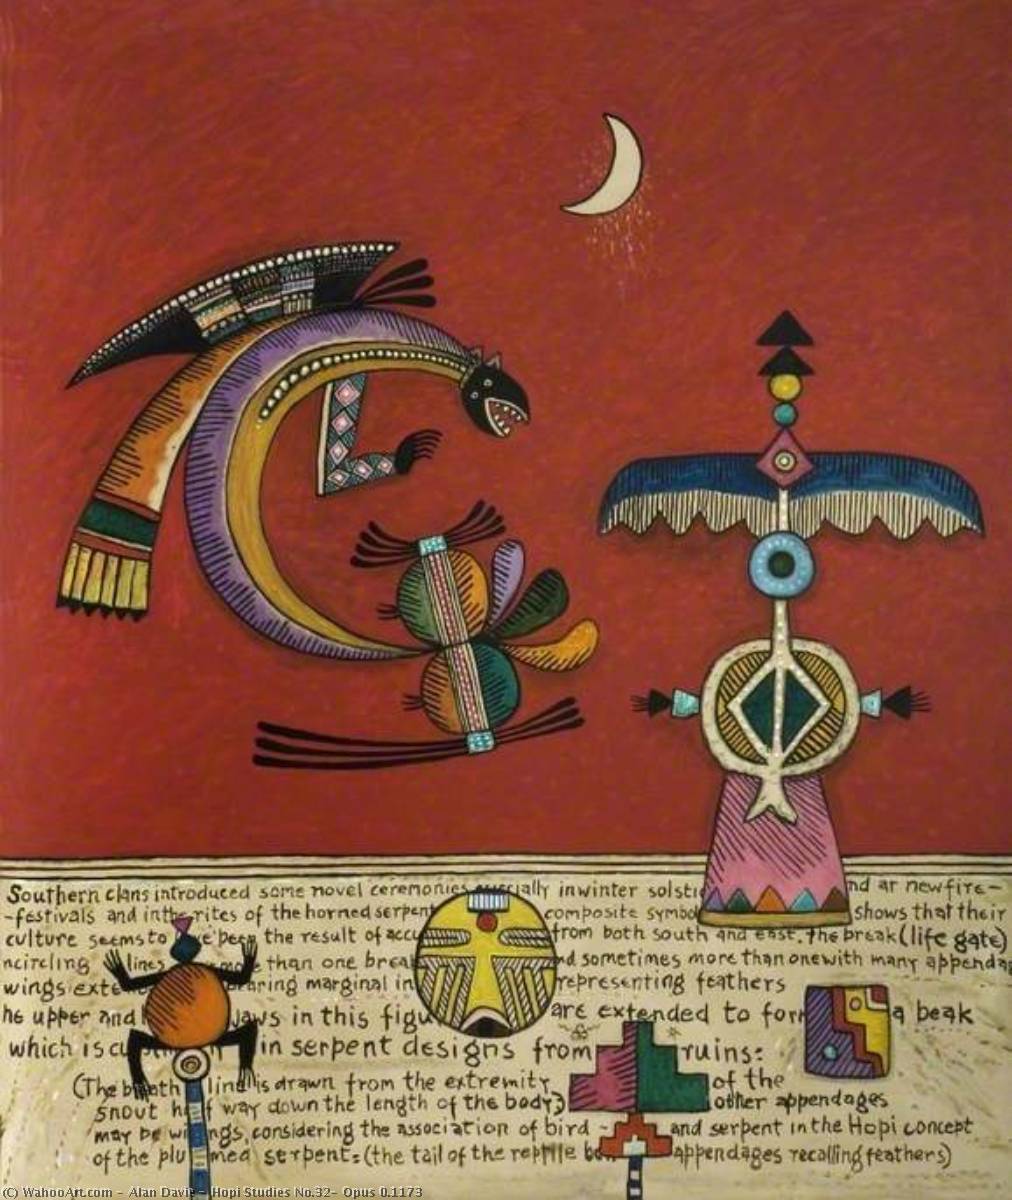 Hopi Studies No.32, Opus 0.1173, 1991 by Alan Davie (1920-2014) Alan Davie | ArtsDot.com